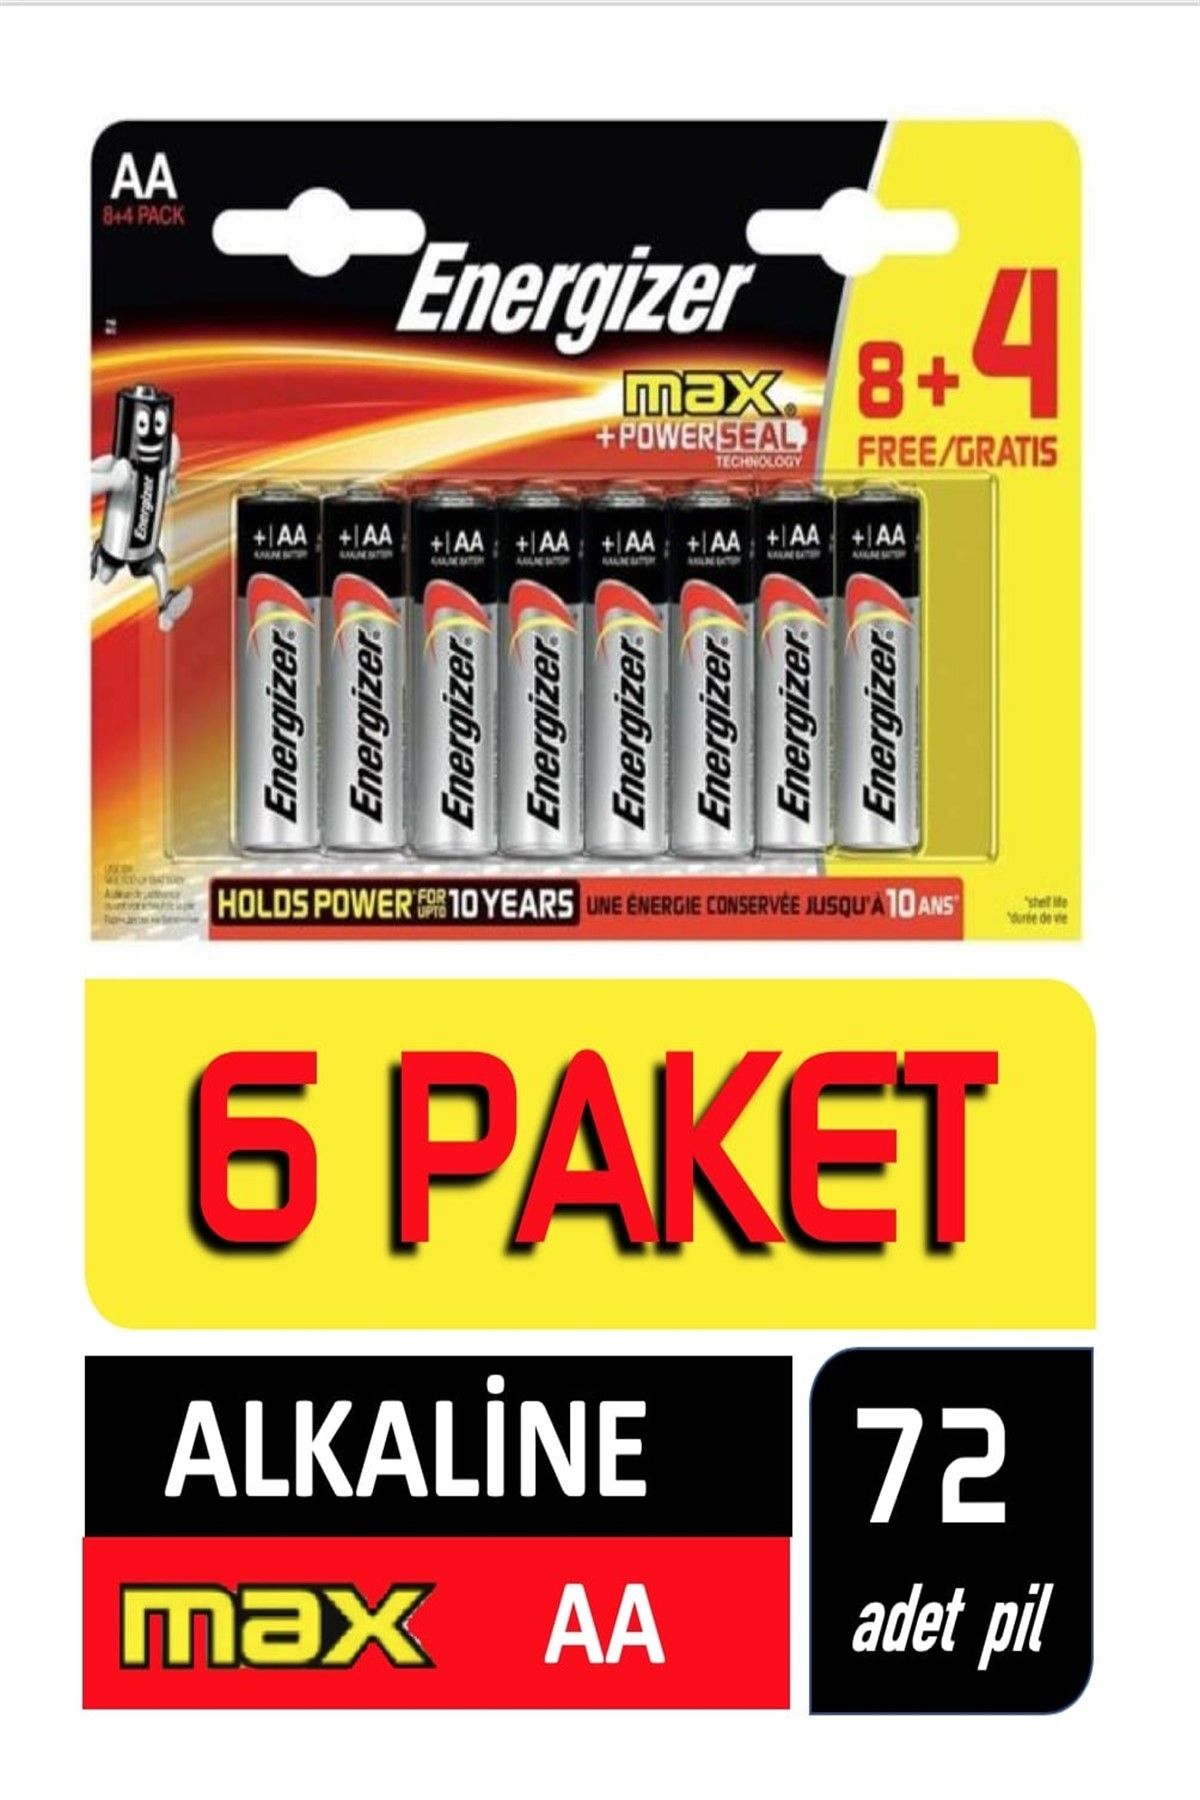 Energizer Alkaline Max Power Seal 72 li AA Kalem Pil